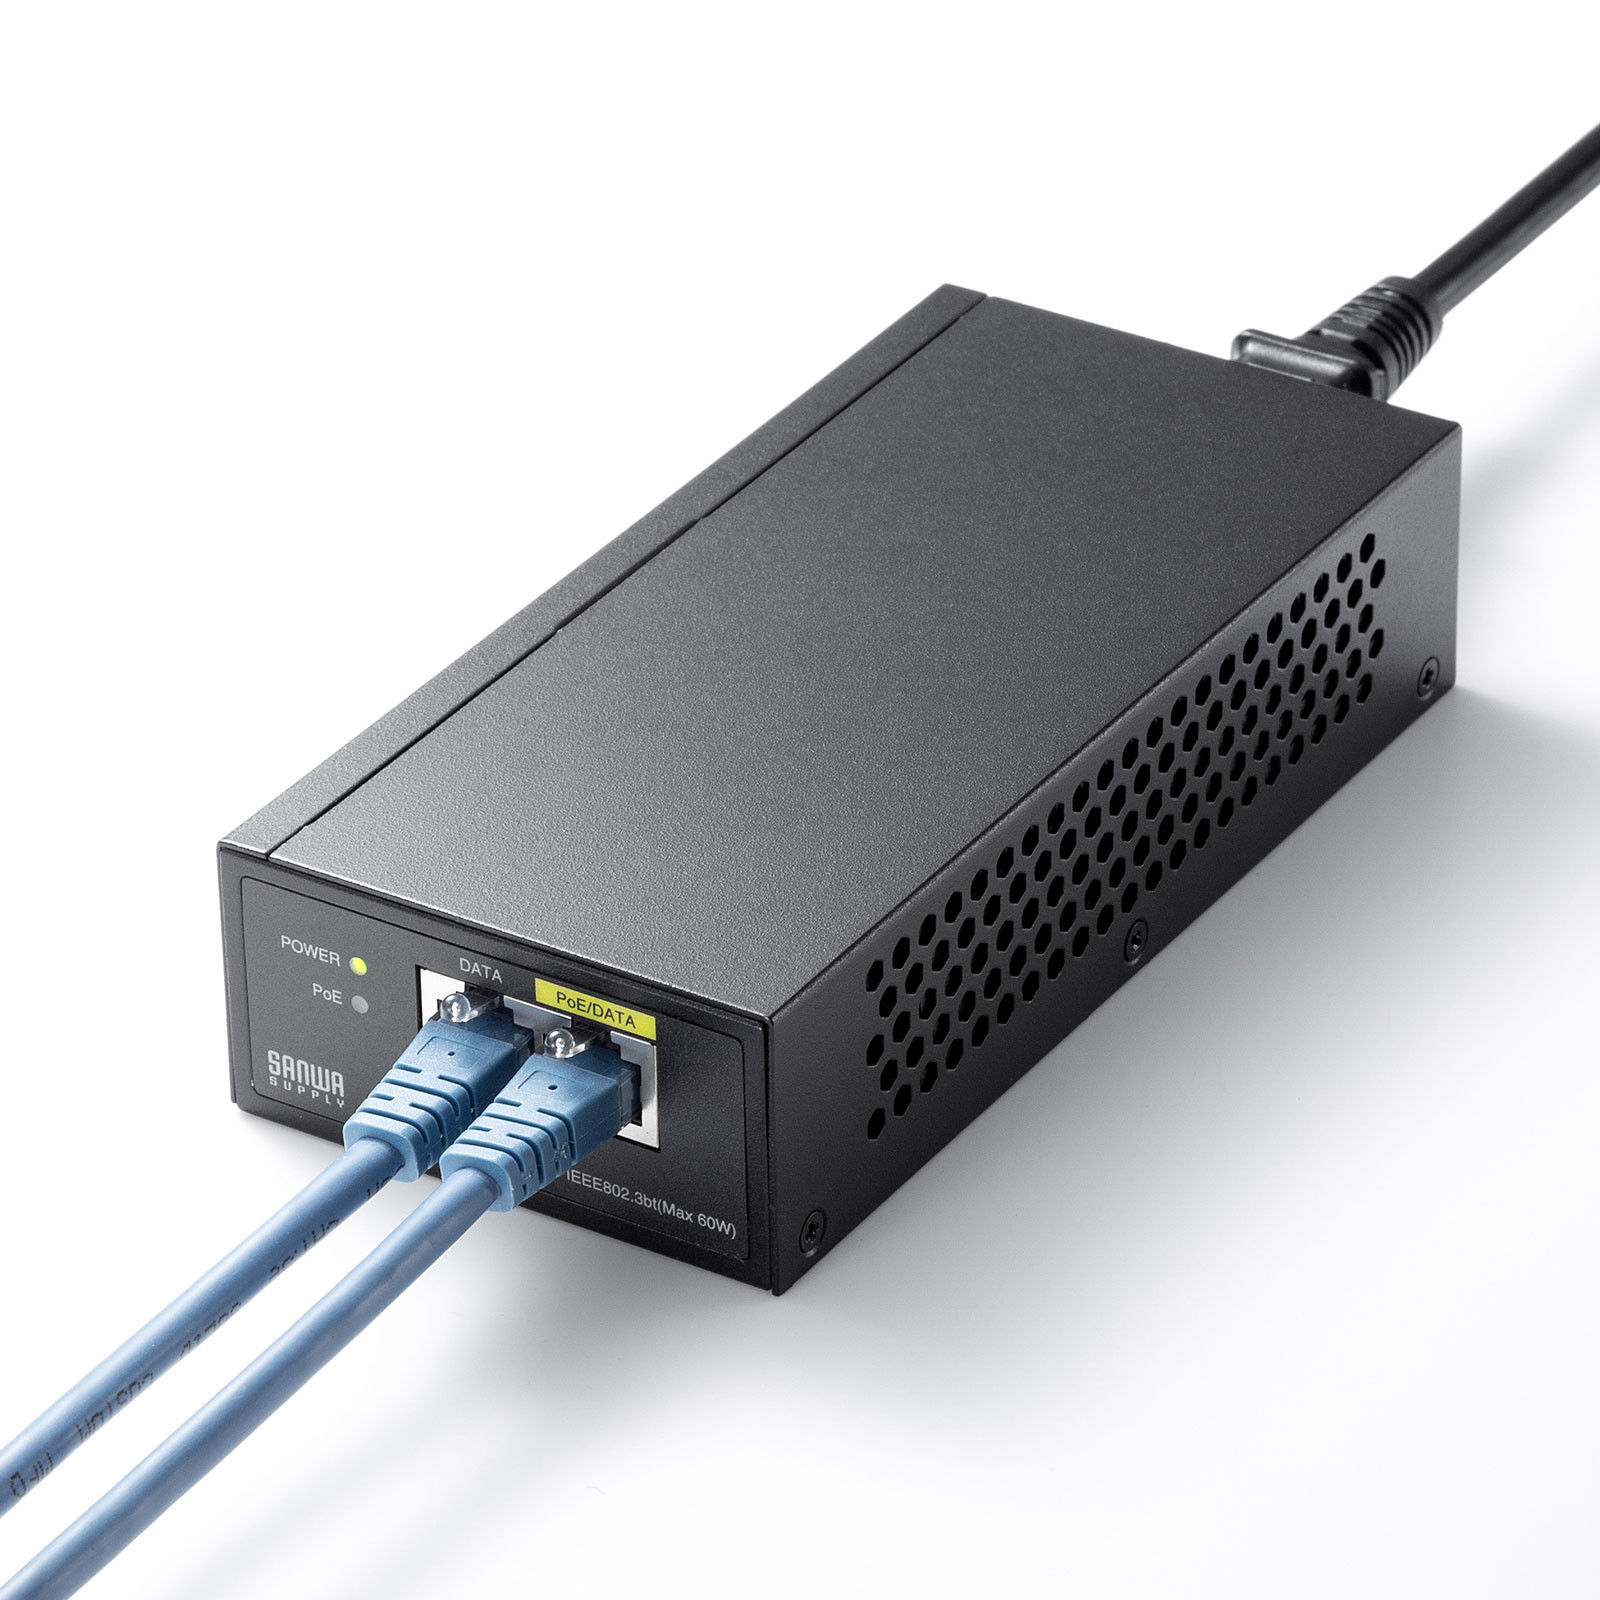 PoE++対応で最大60W給電可能なPoEインジェクター「LAN-GIHINJ5